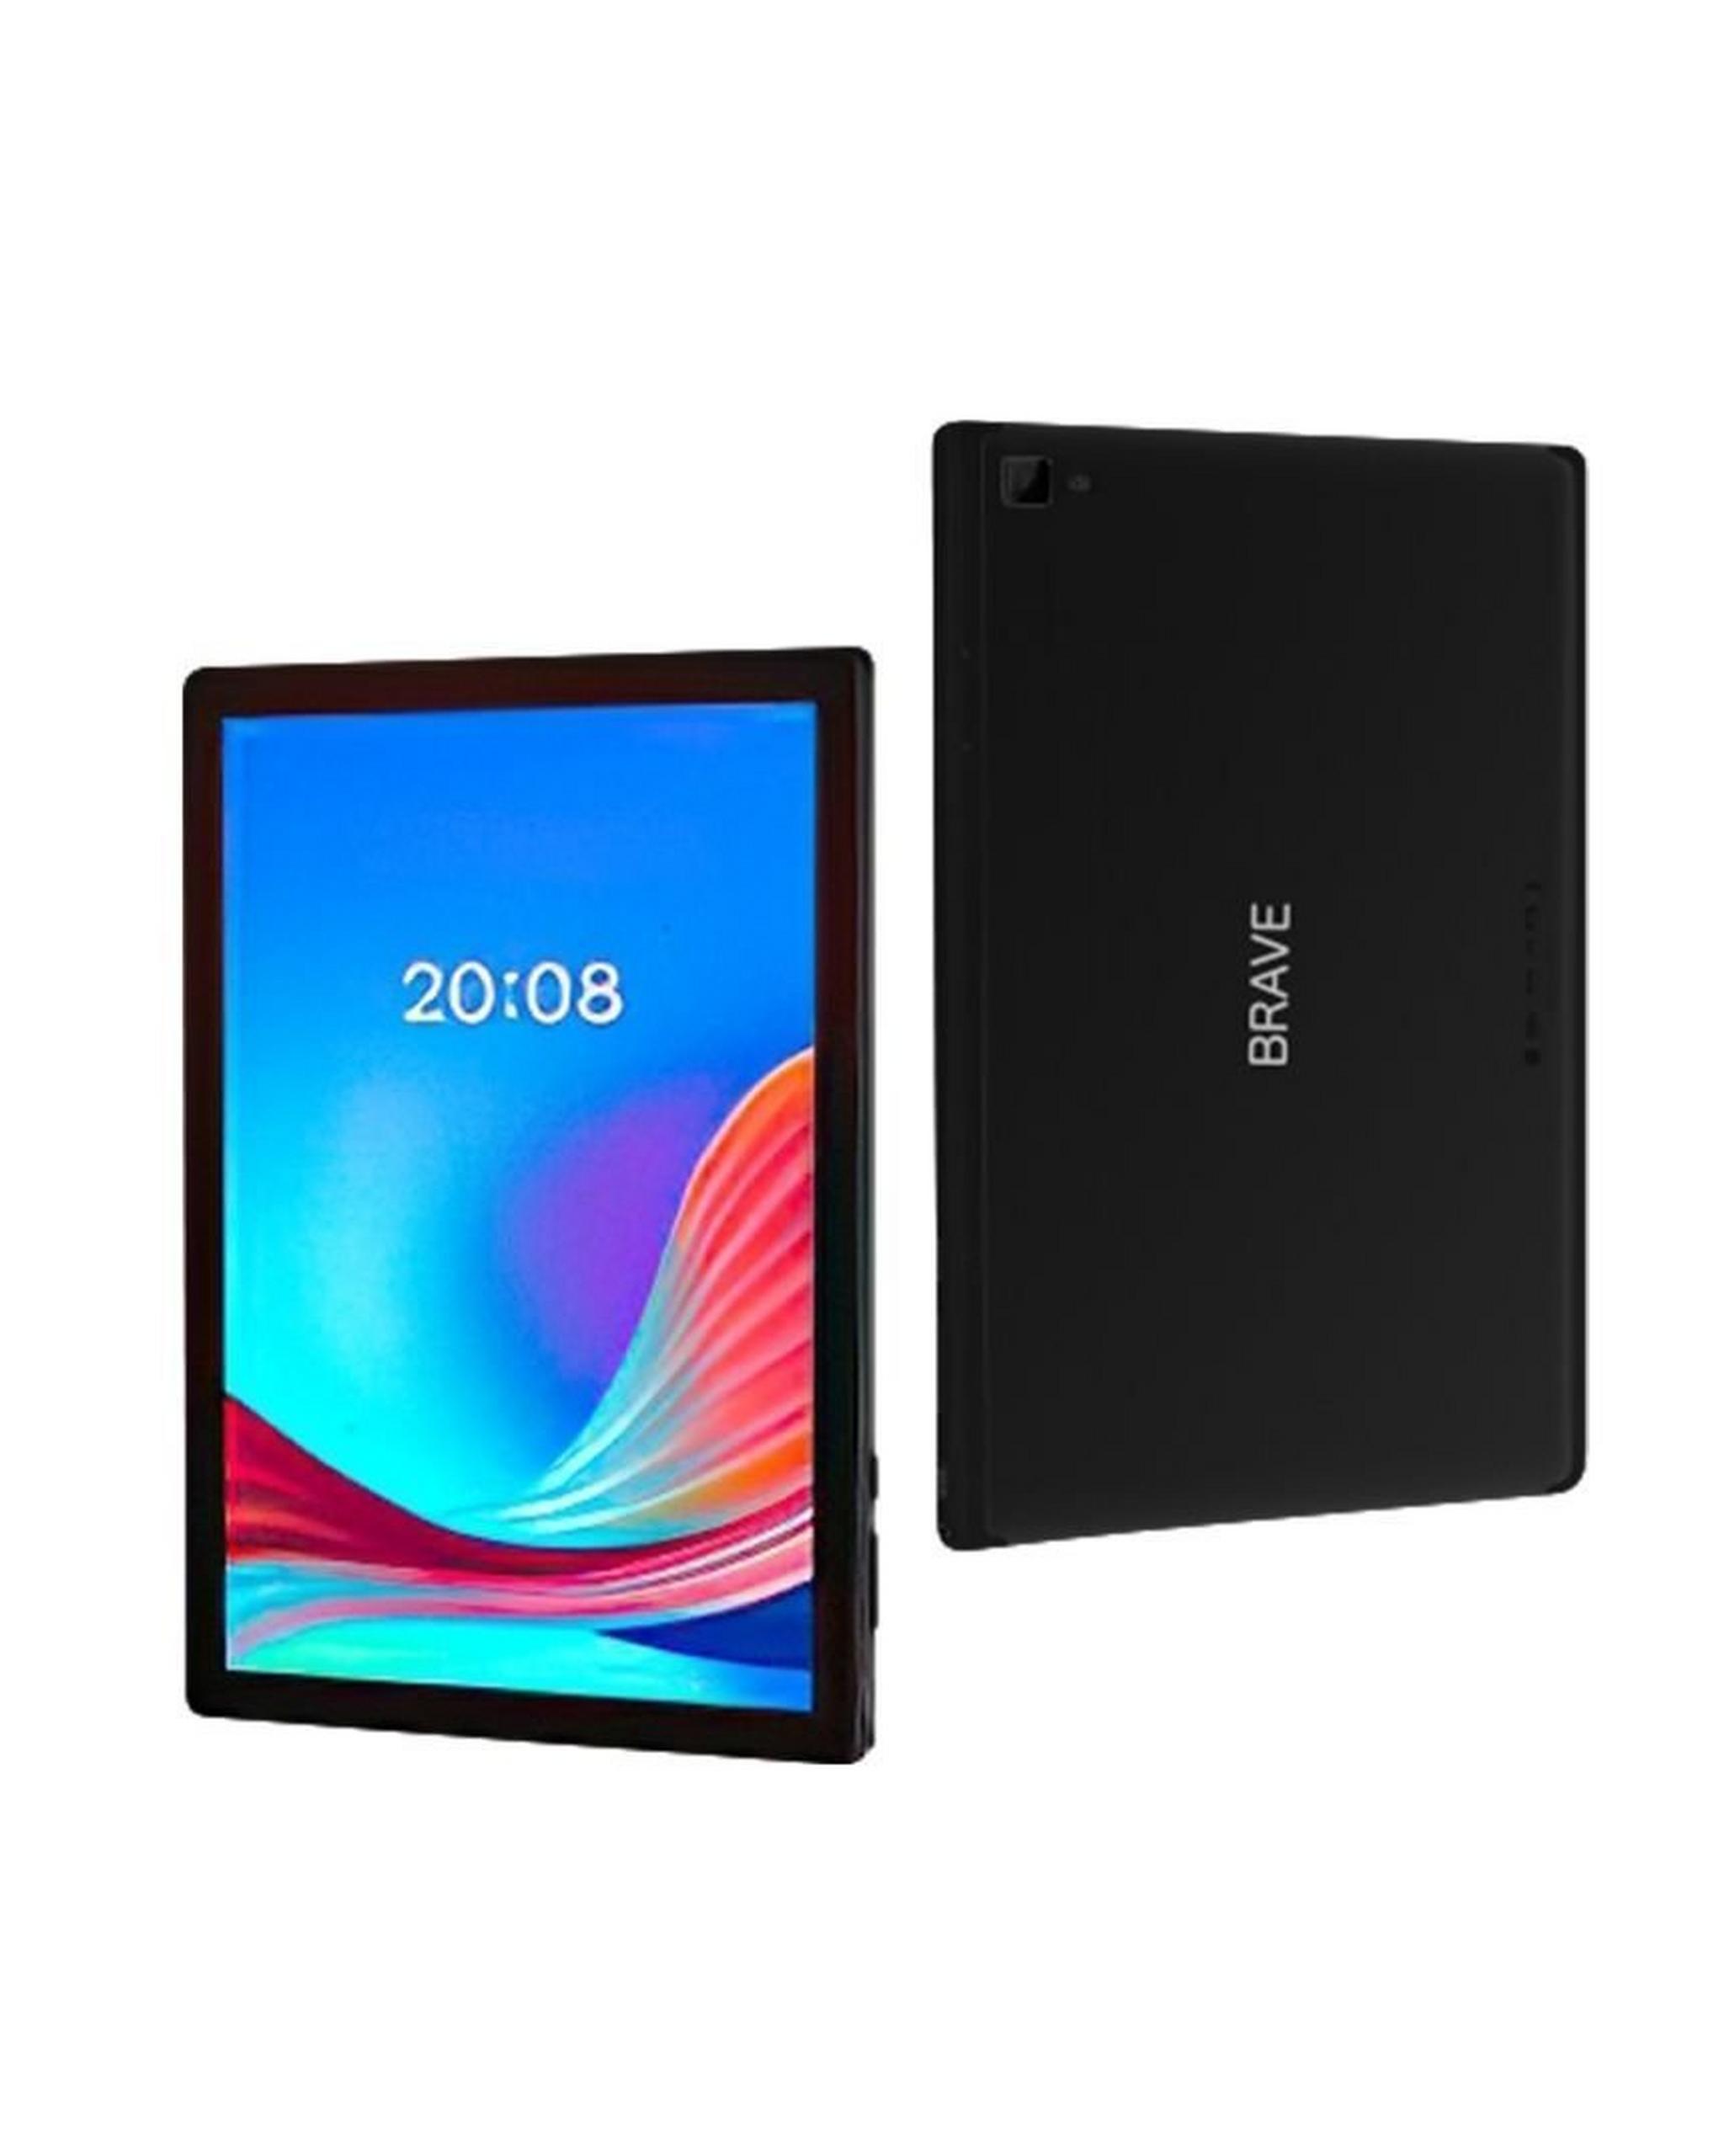 Brave Vaso RAM 3GB, 32GB, 4G 10" Tablet + Keyboard & Headset – Black